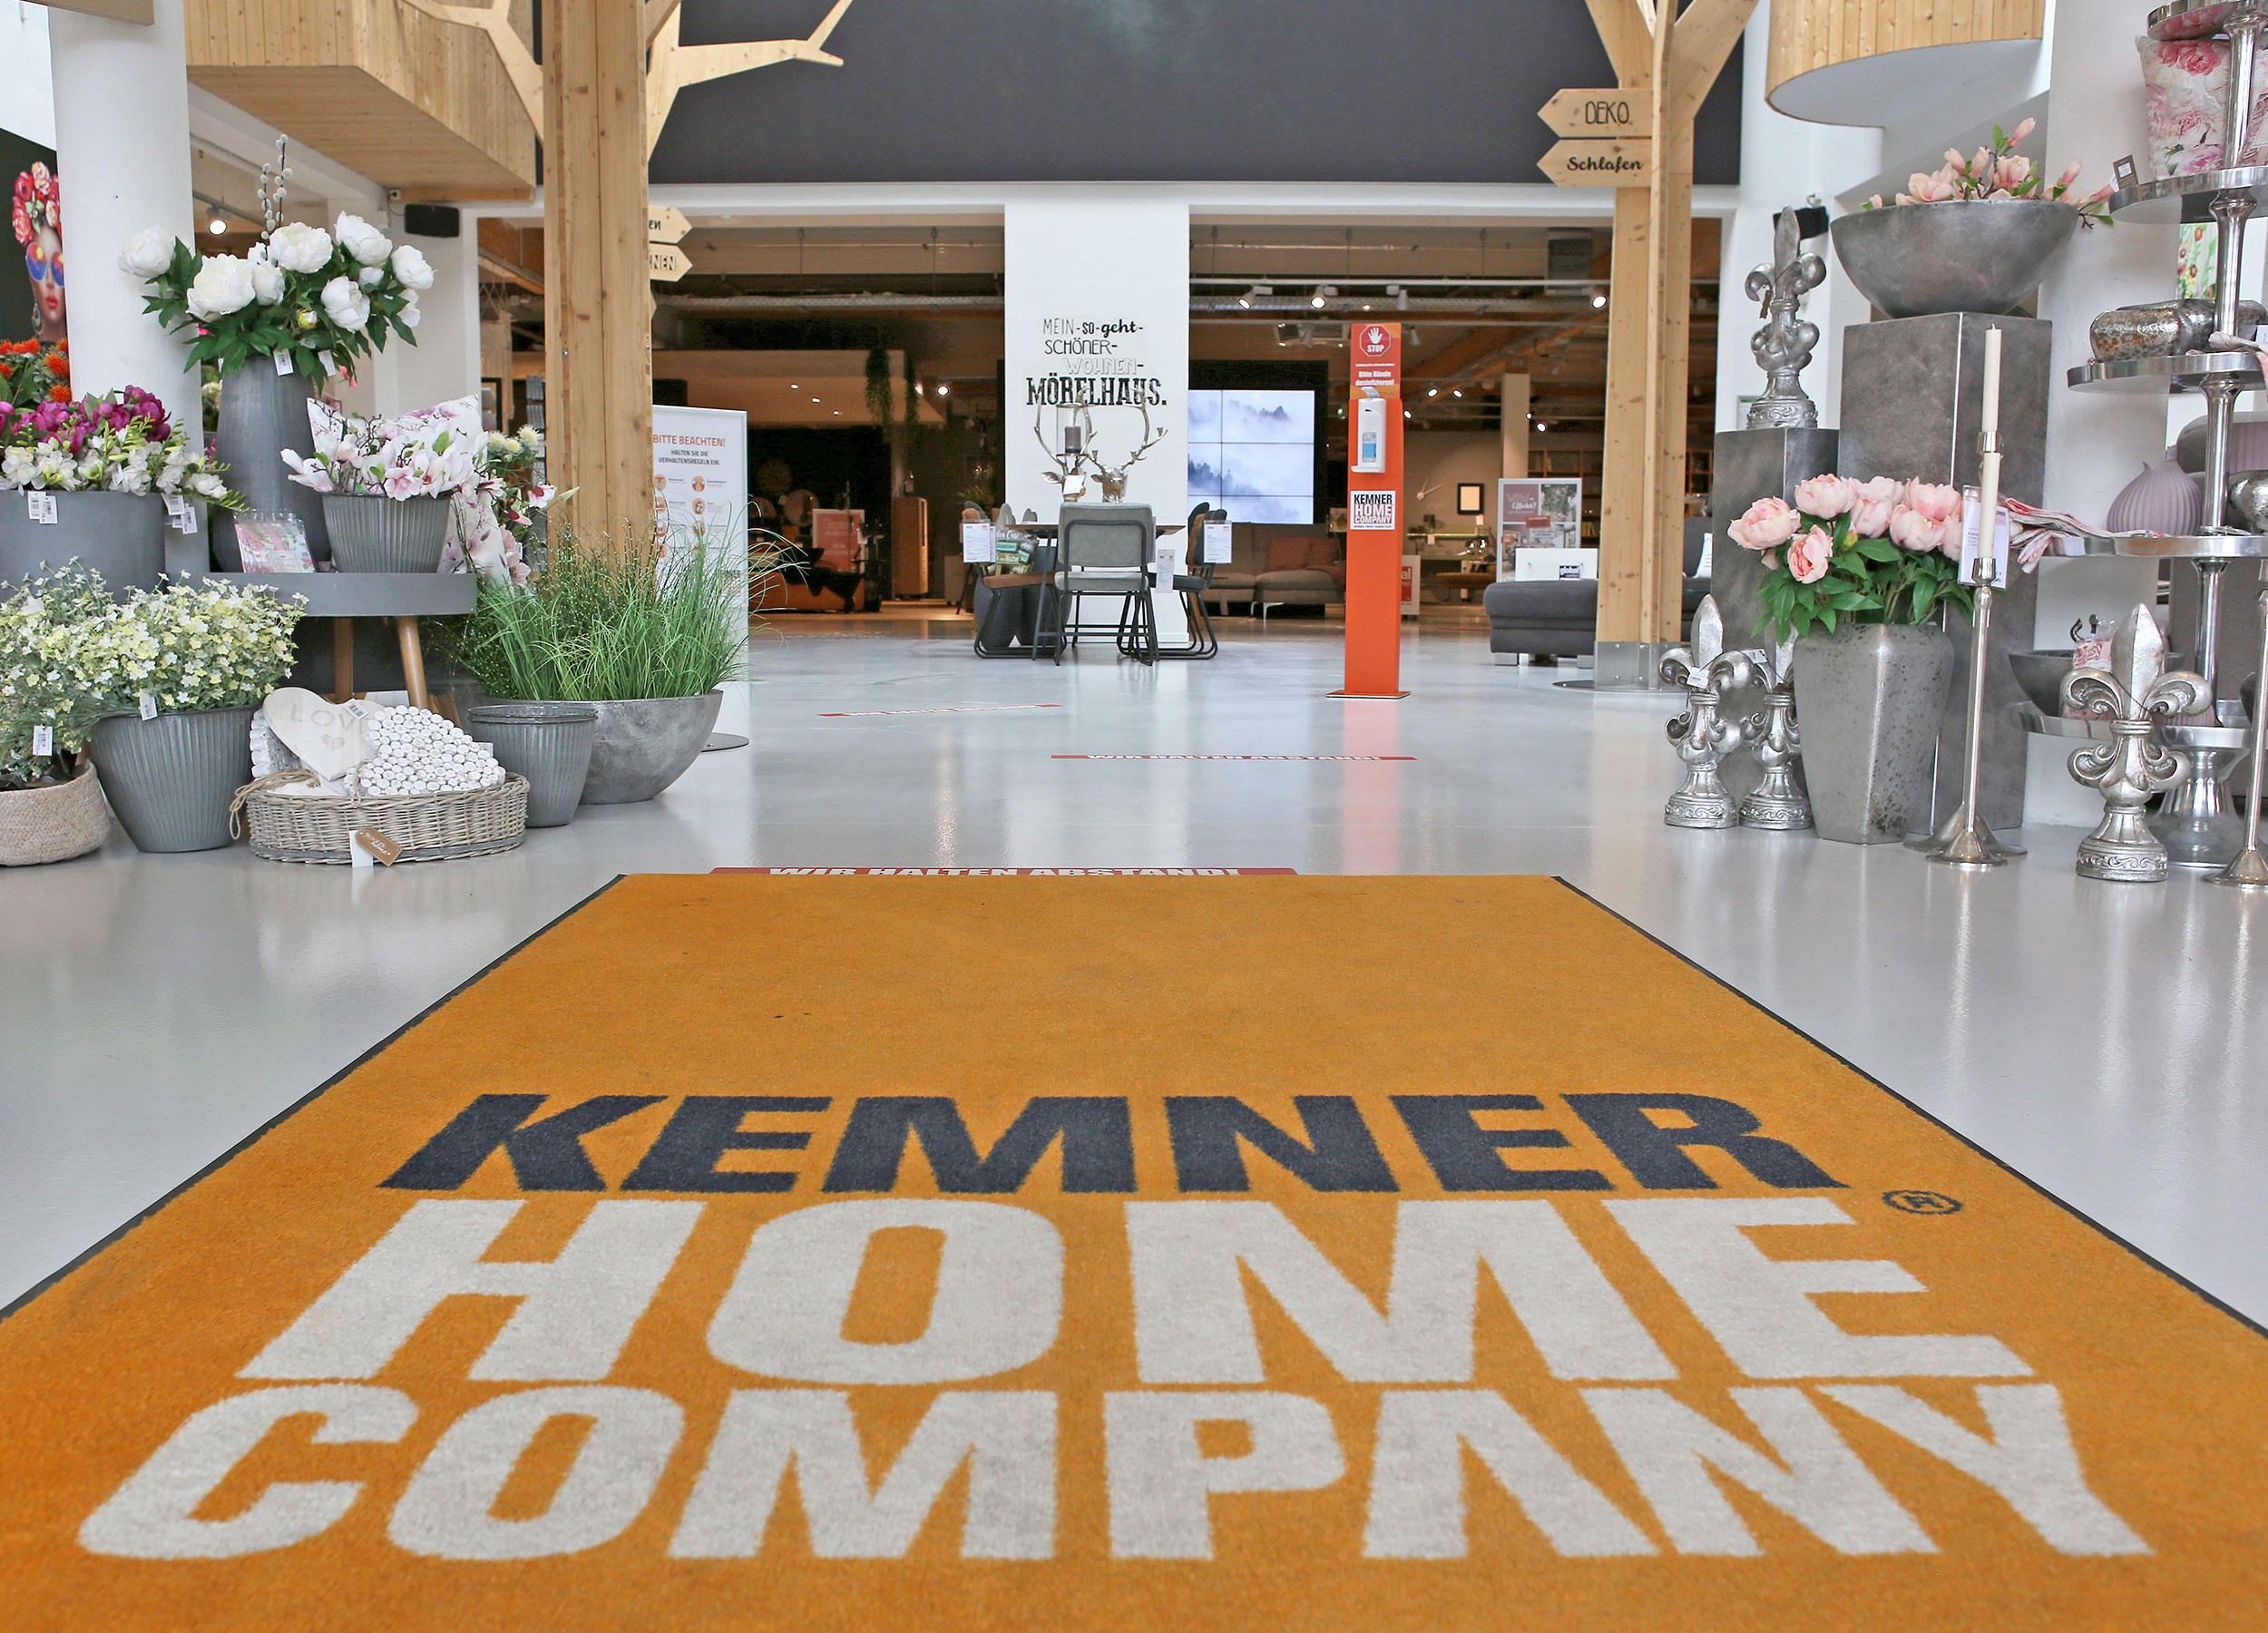 Kemner Home Company Möbelhaus Eingangsbereich